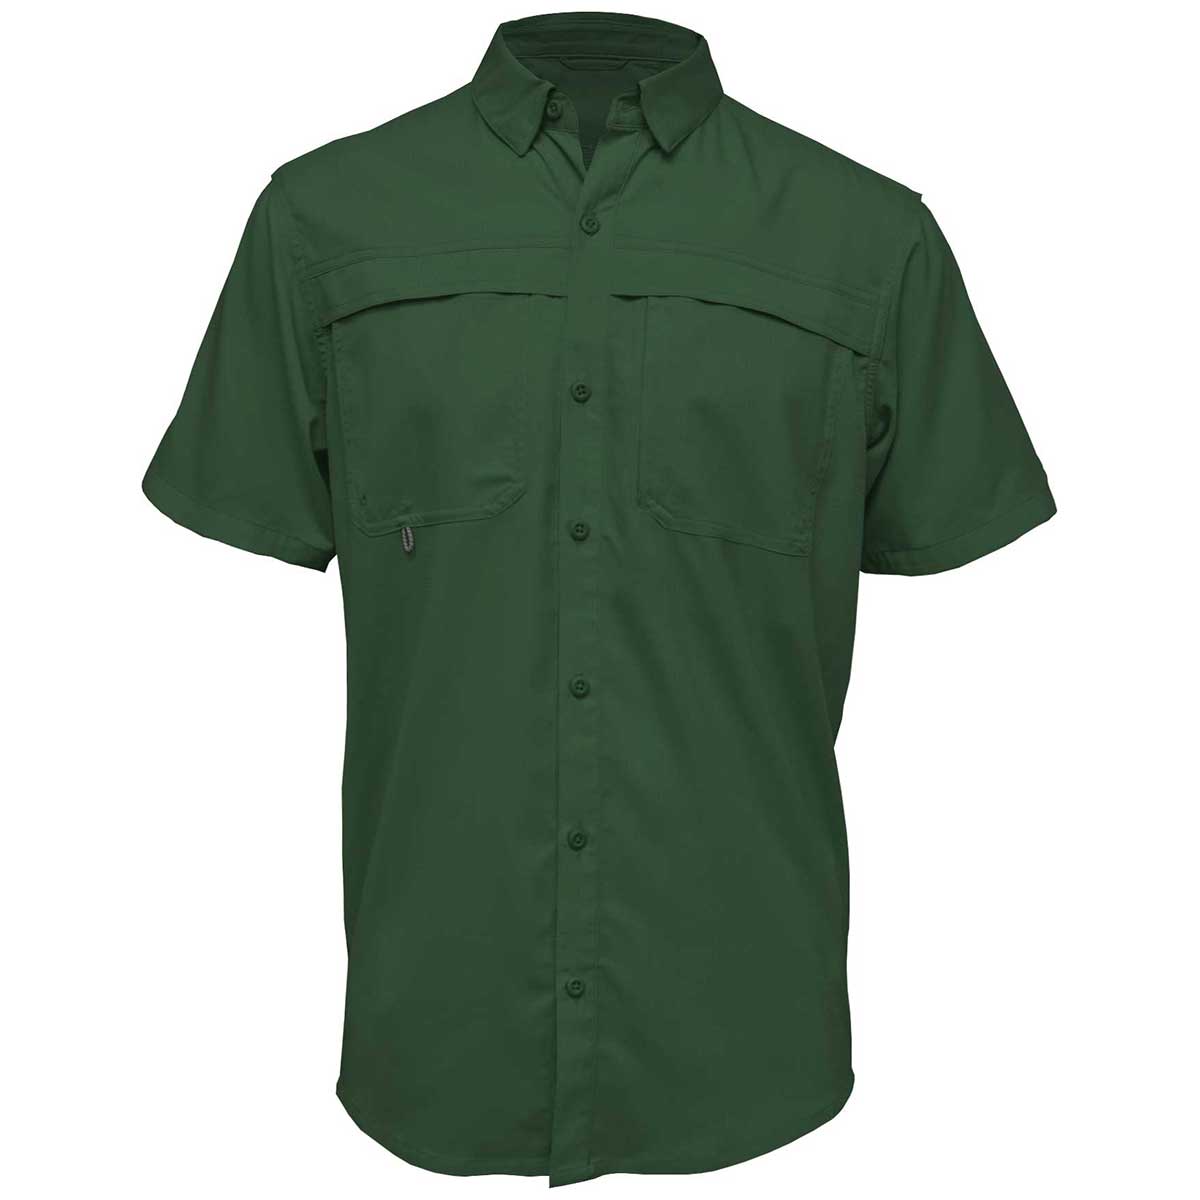 BAW Men's Dark Green Short Sleeve Fishing Shirt - Sample